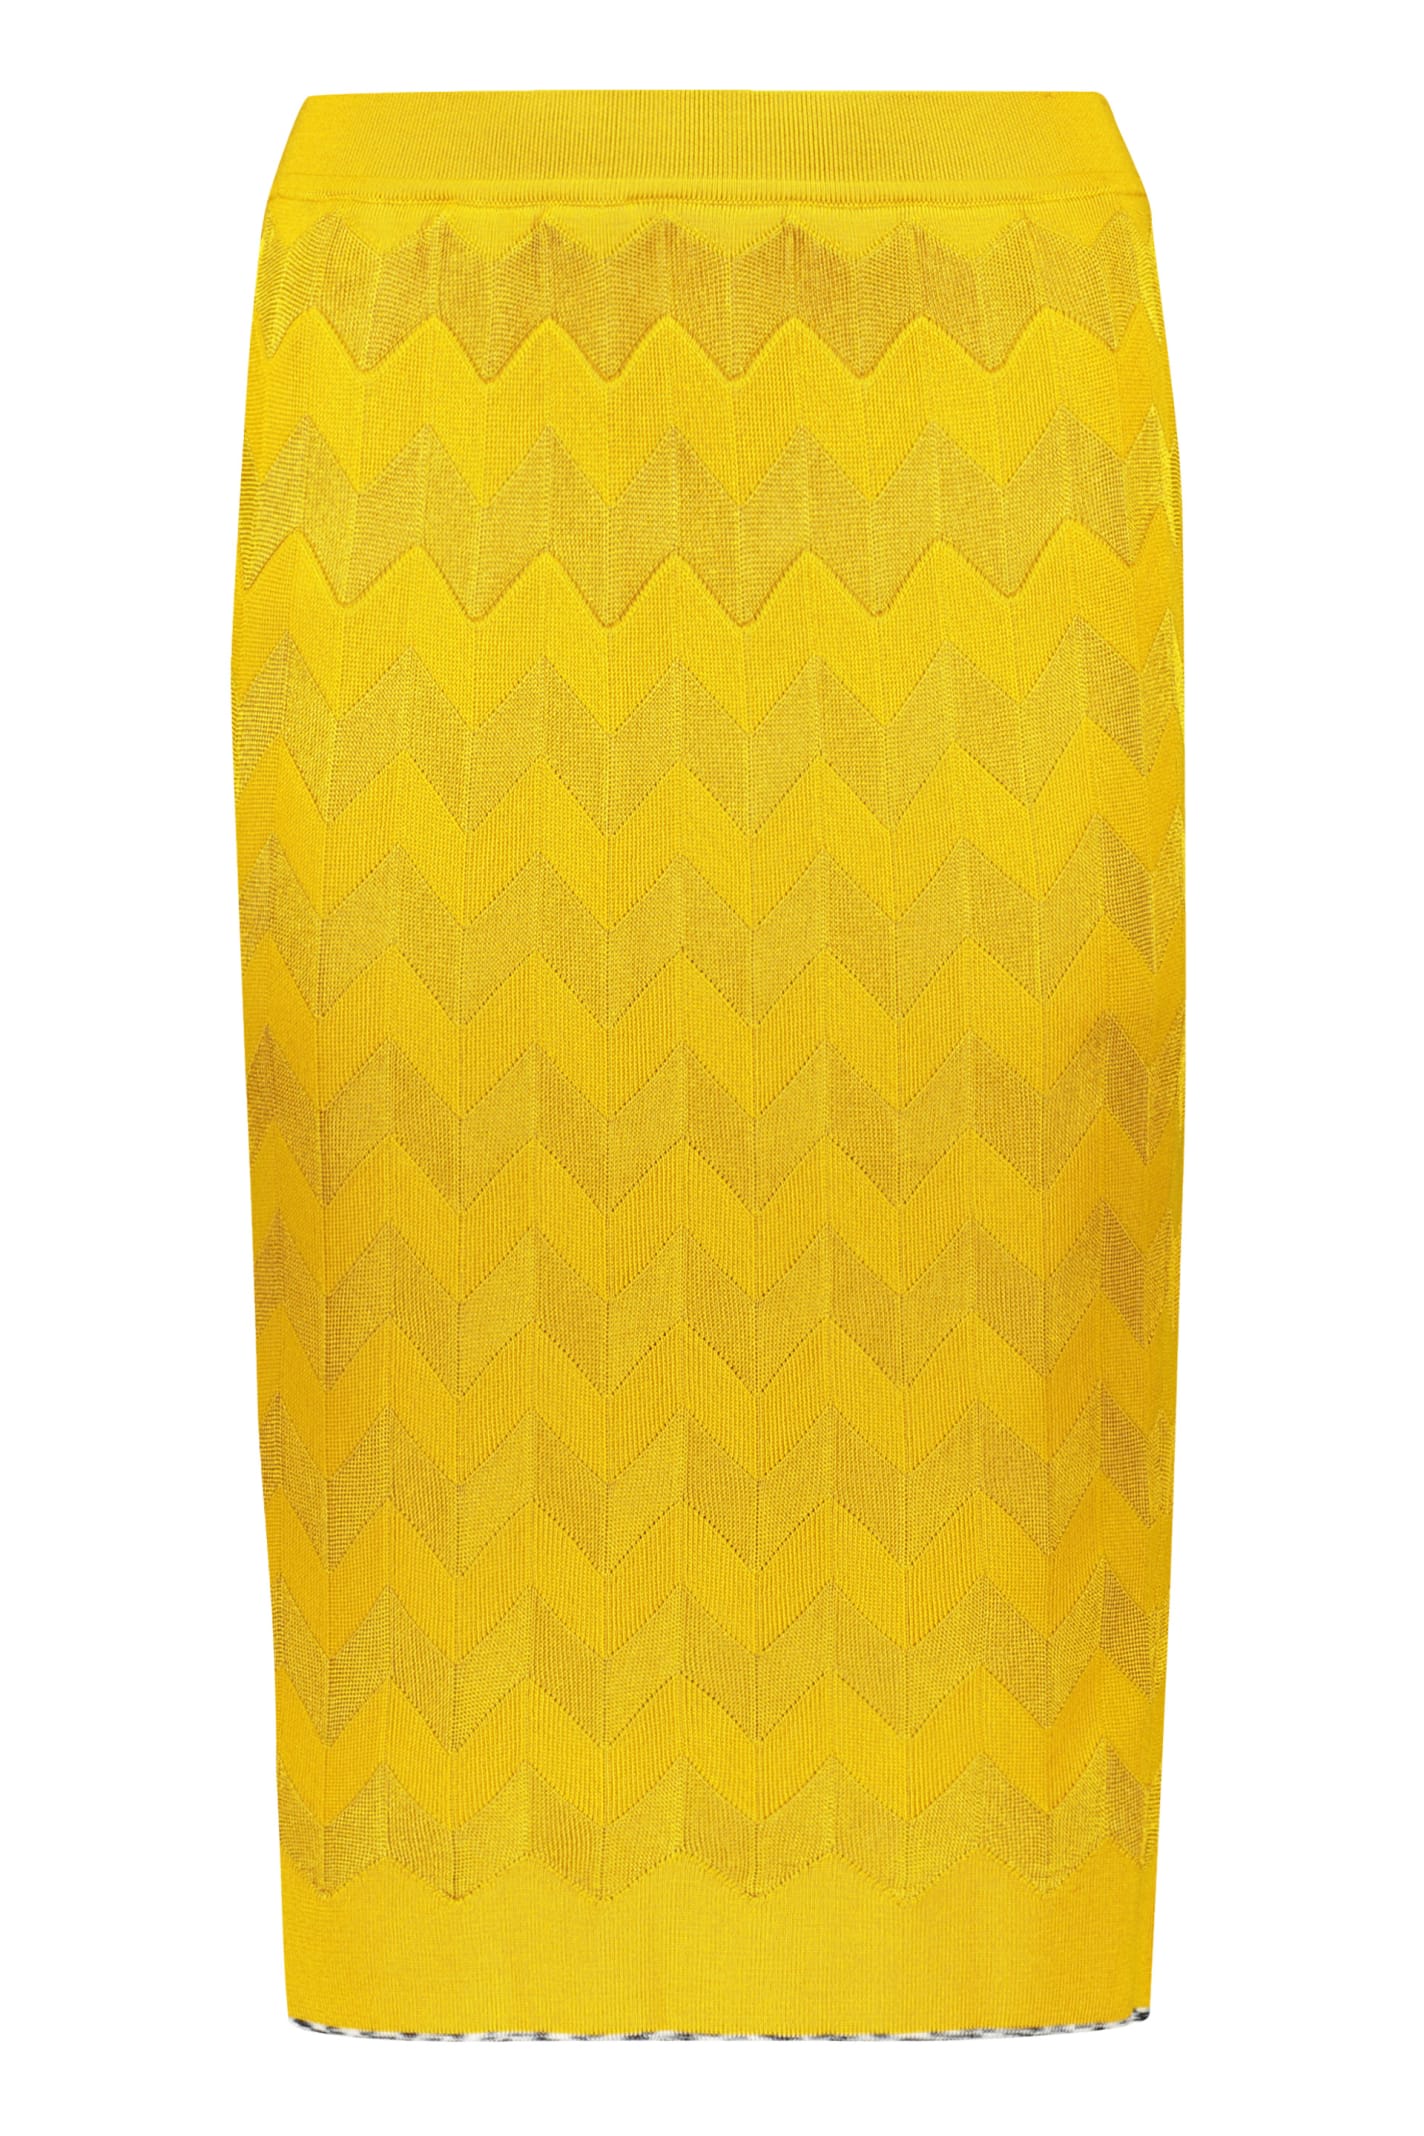 Missoni Knit Skirt In Mustard